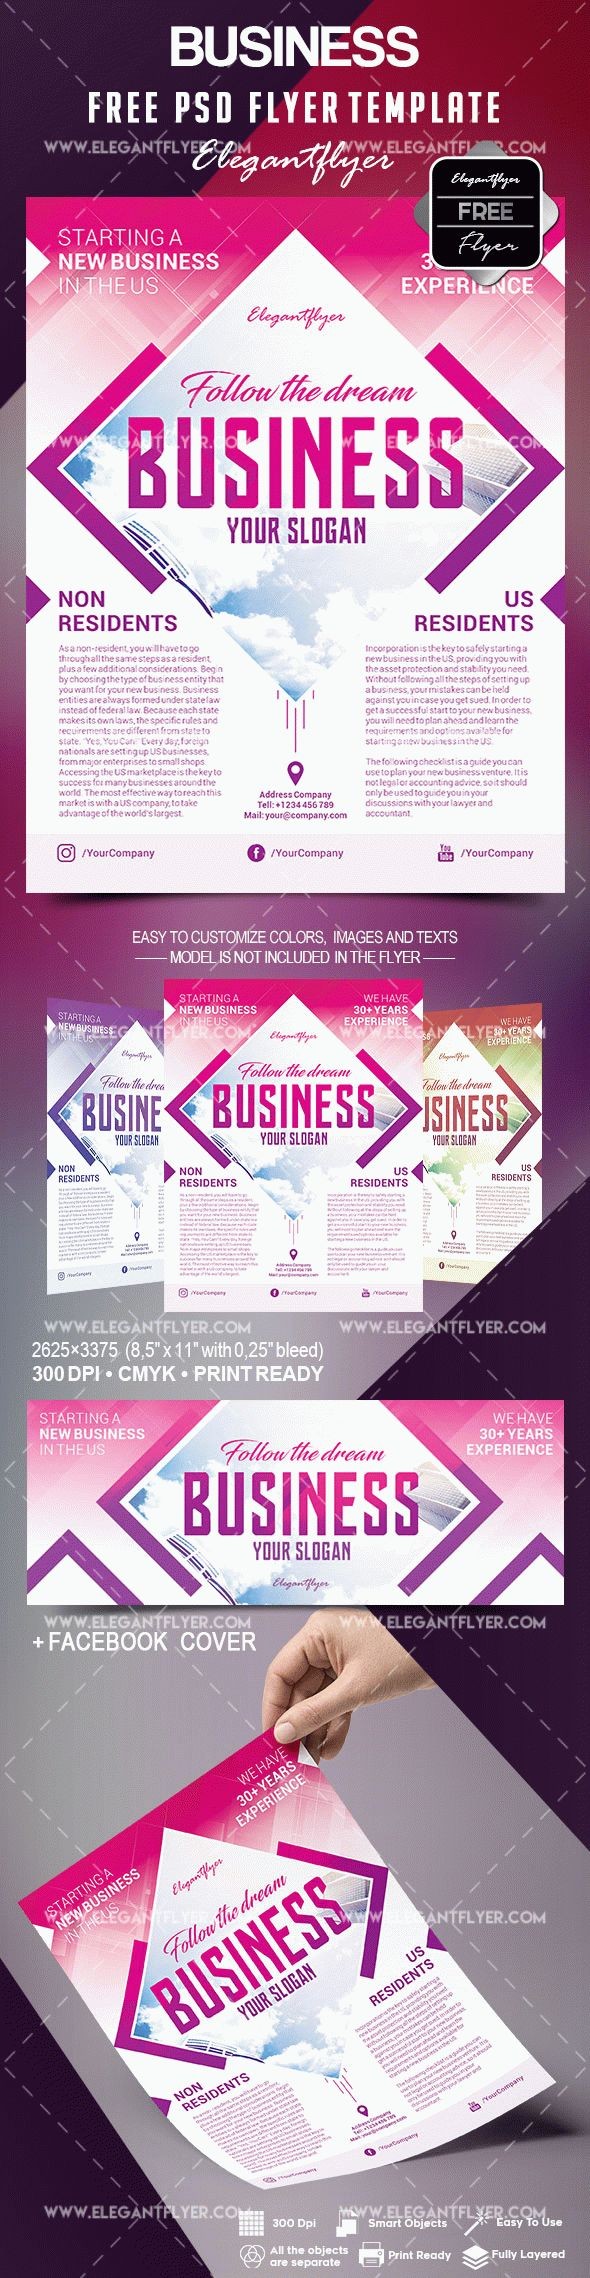 Business Flyer by ElegantFlyer